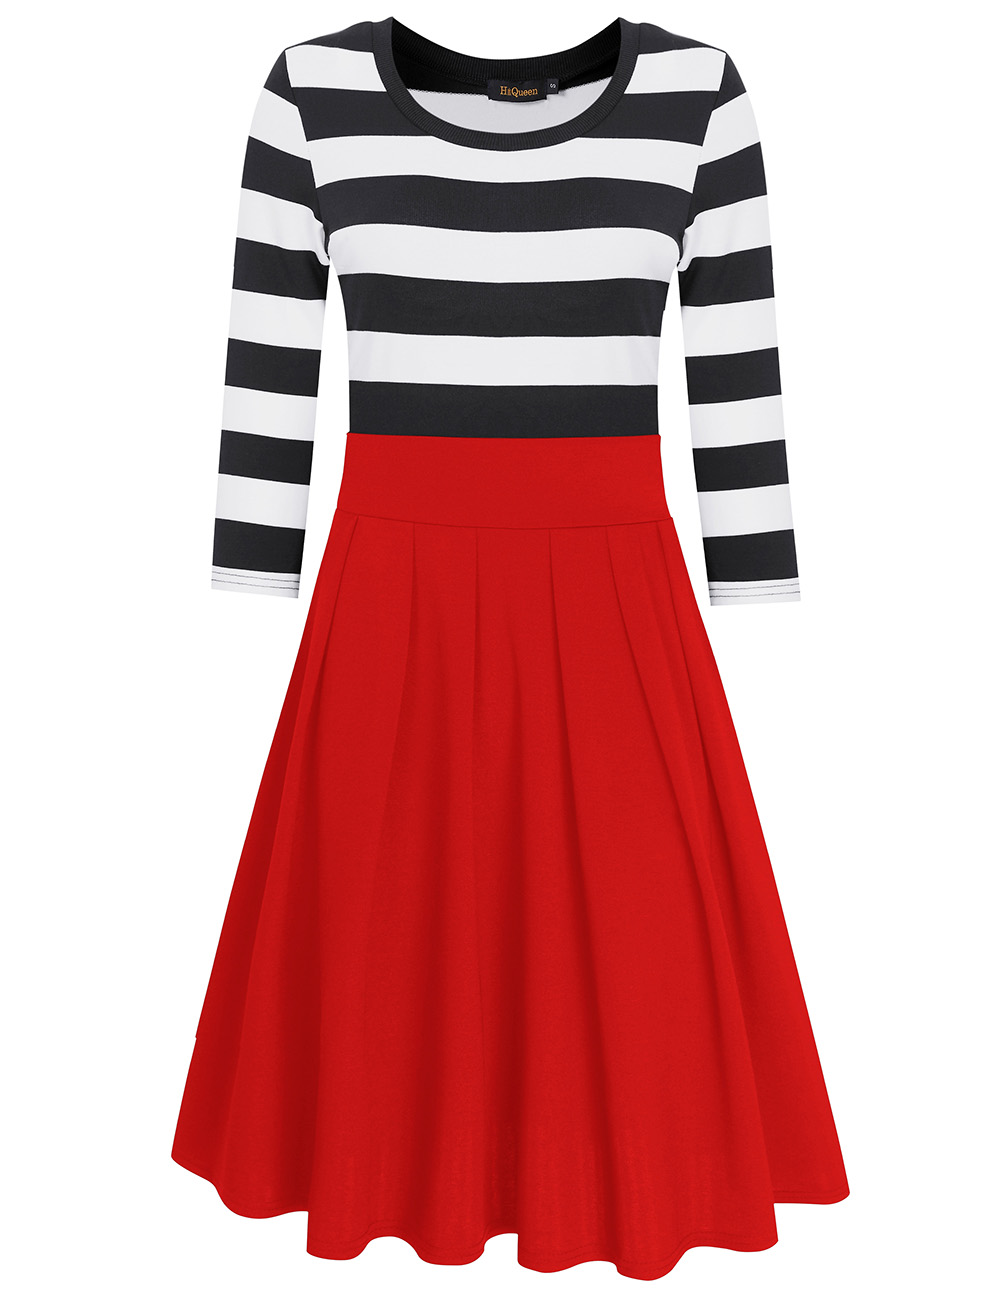 HiQueen Women Casual Scoop Neck 3/4 Sleeve A-Line Swing Dress Stripe Modest Dresses Red_XL